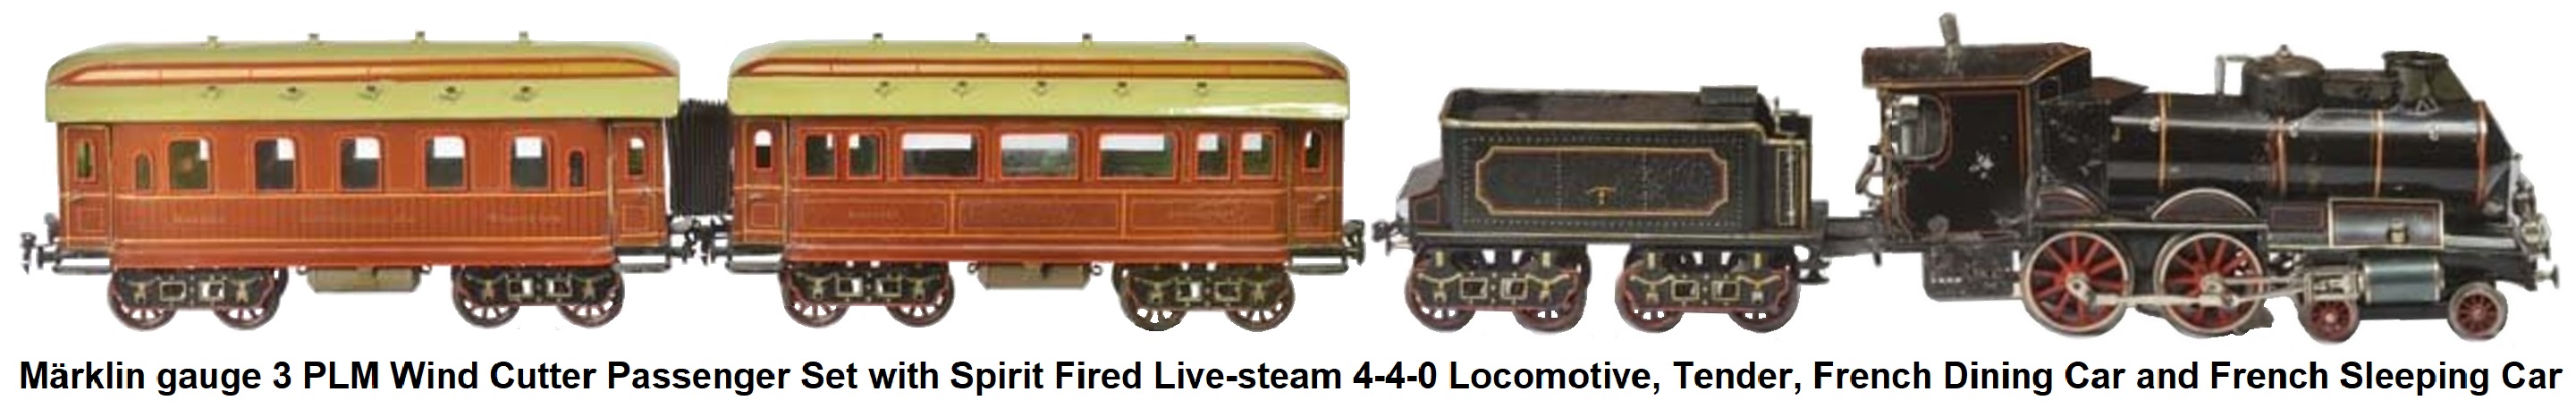 Märklin Gauge 3 train package with Spirit steam locomotive and tender, French dining car, French sleeping car